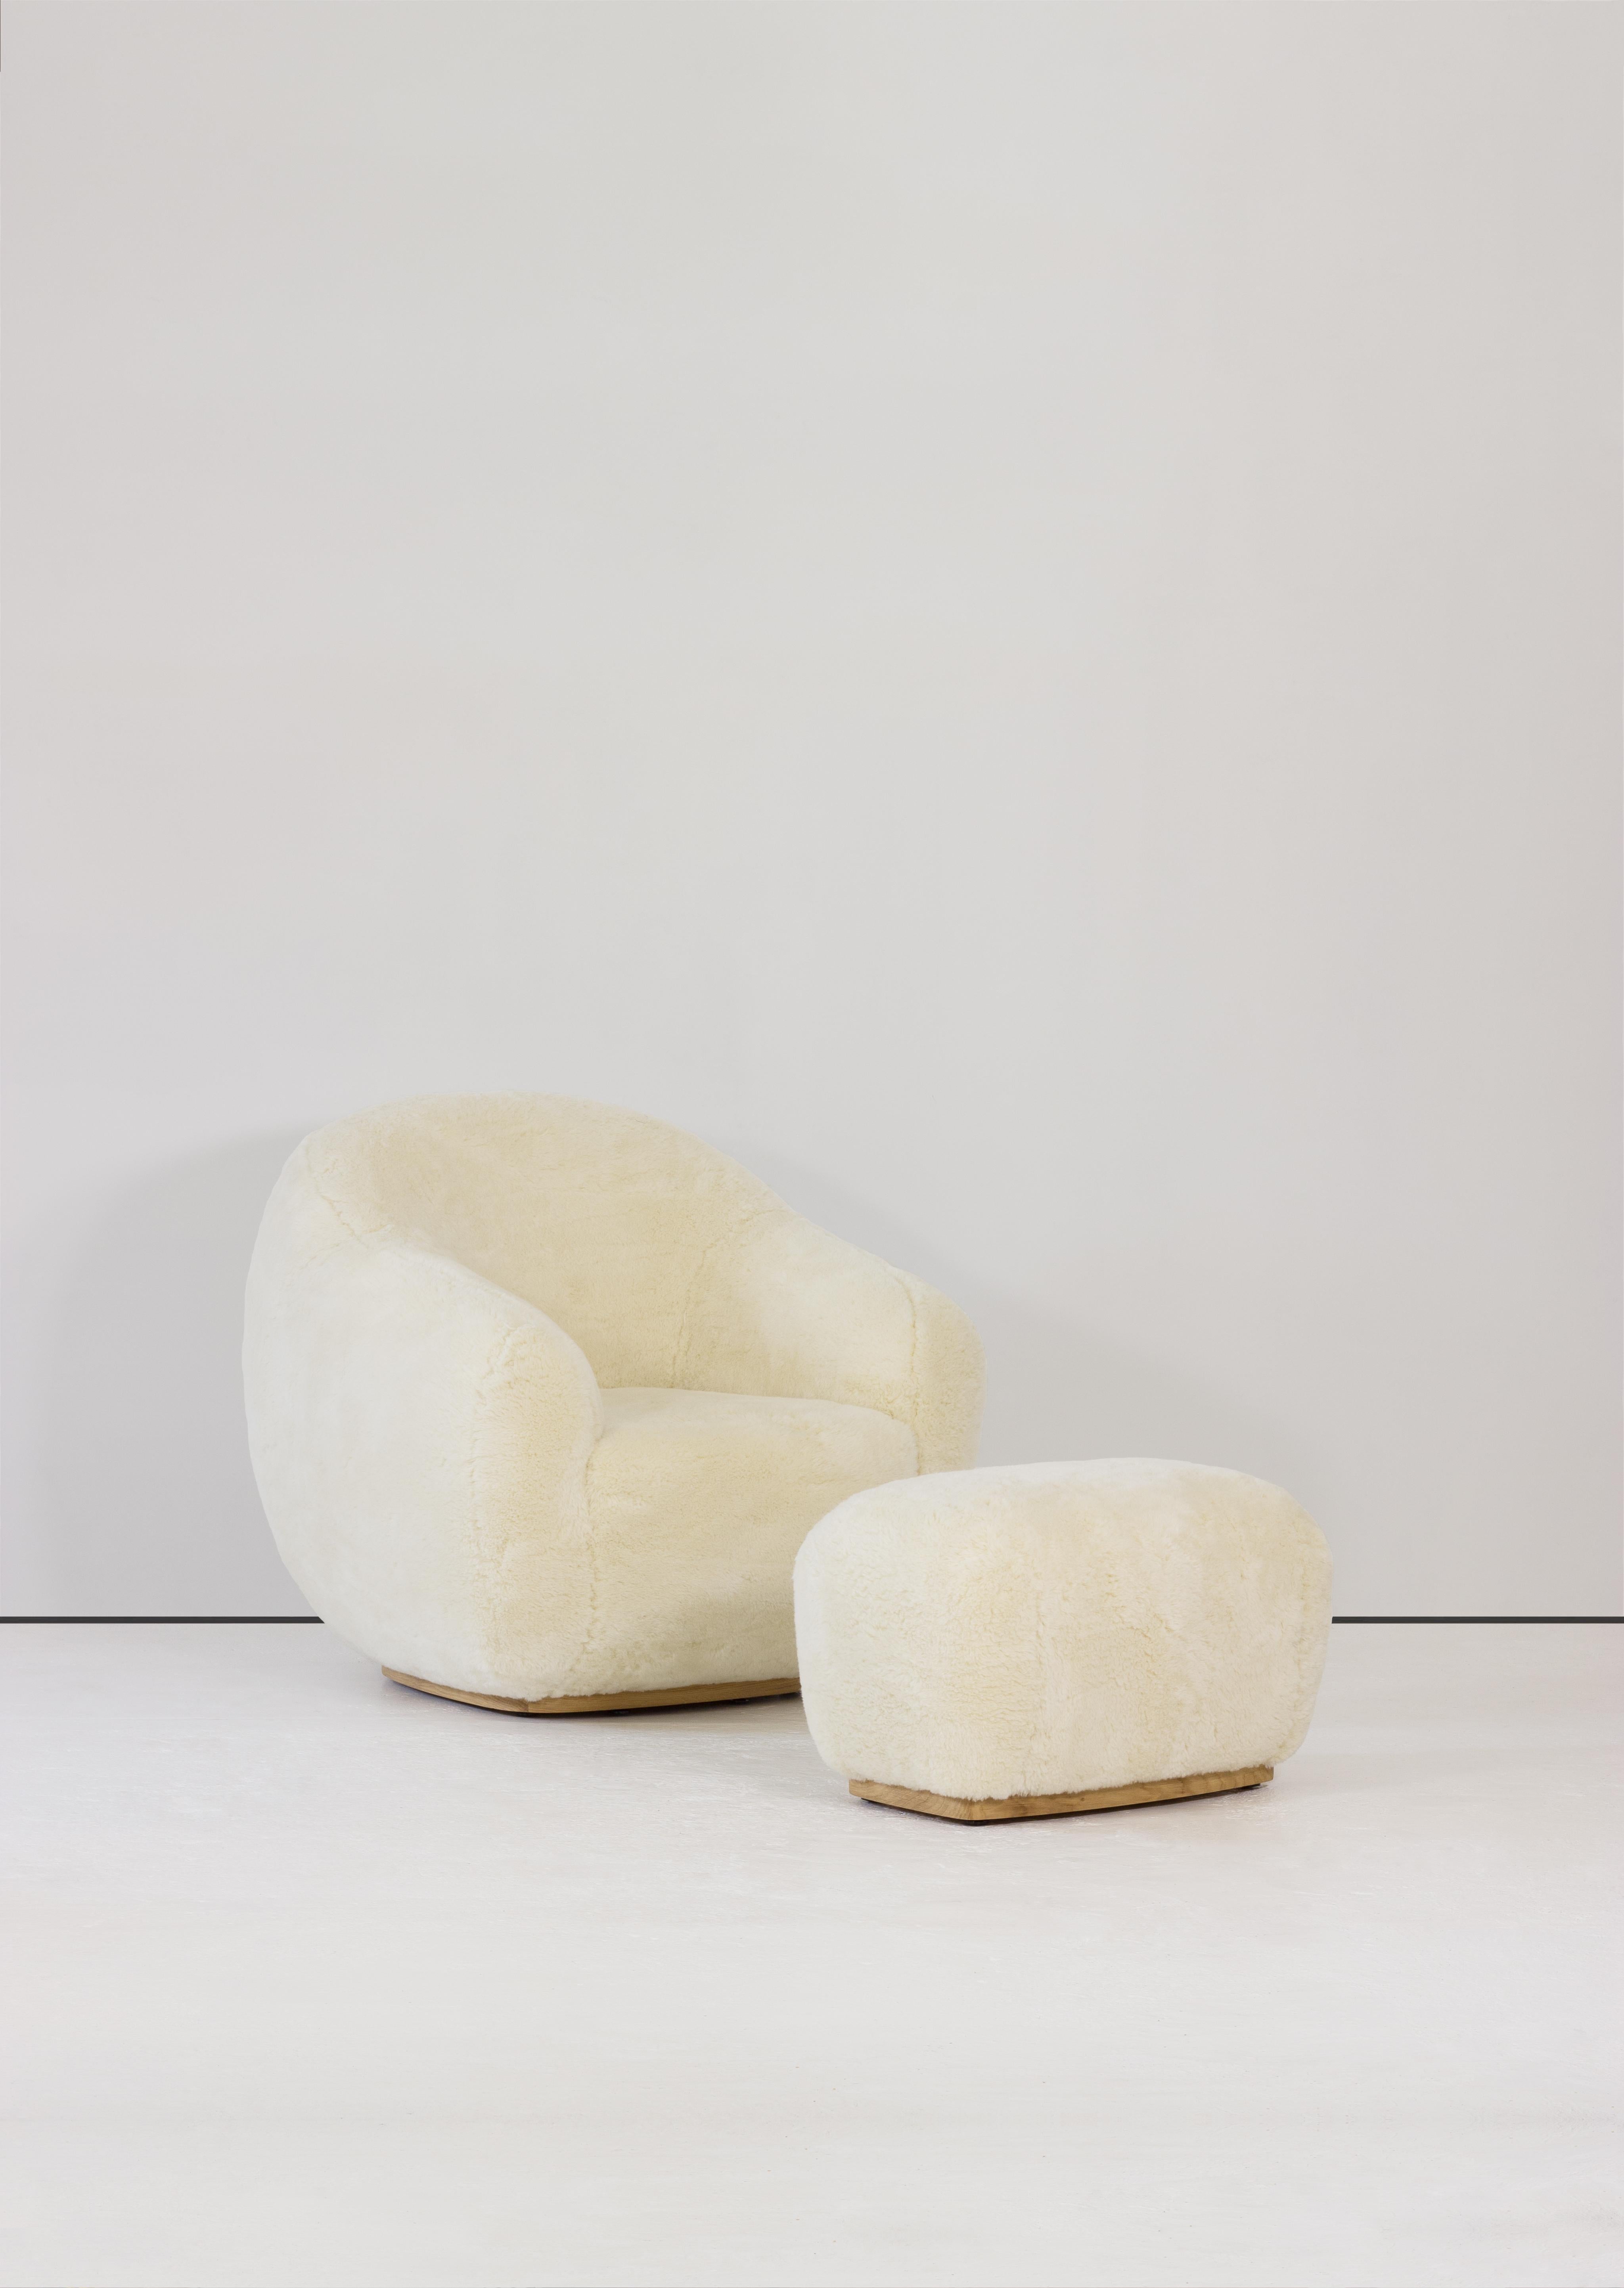 Niemeyer II Armchair and Stool, COM, InsidherLand by Joana Santos Barbosa For Sale 2